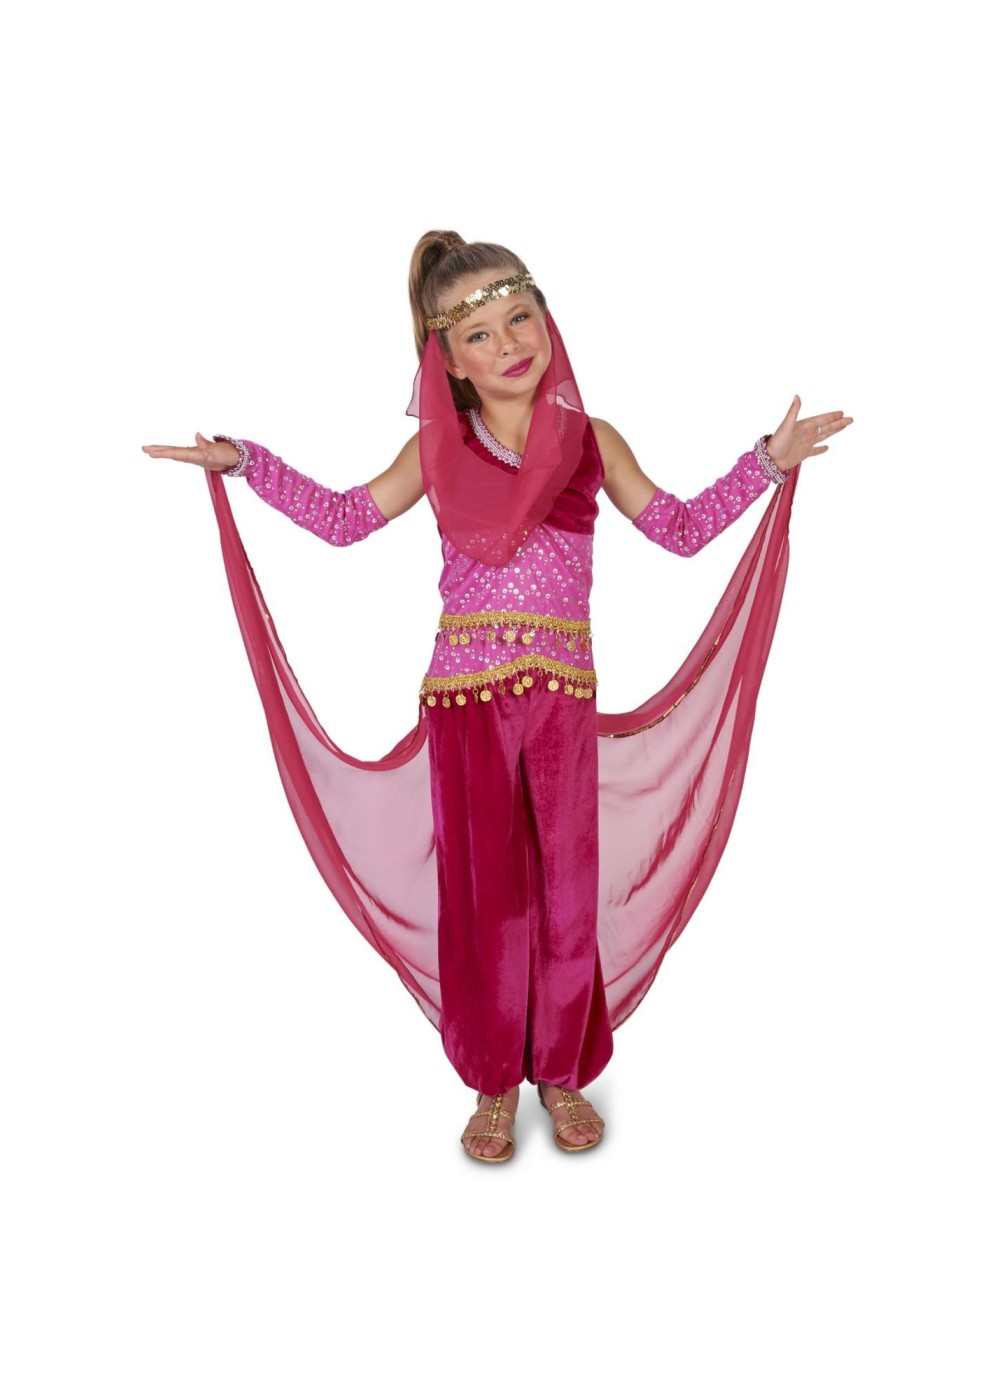 genie costume for teenagers